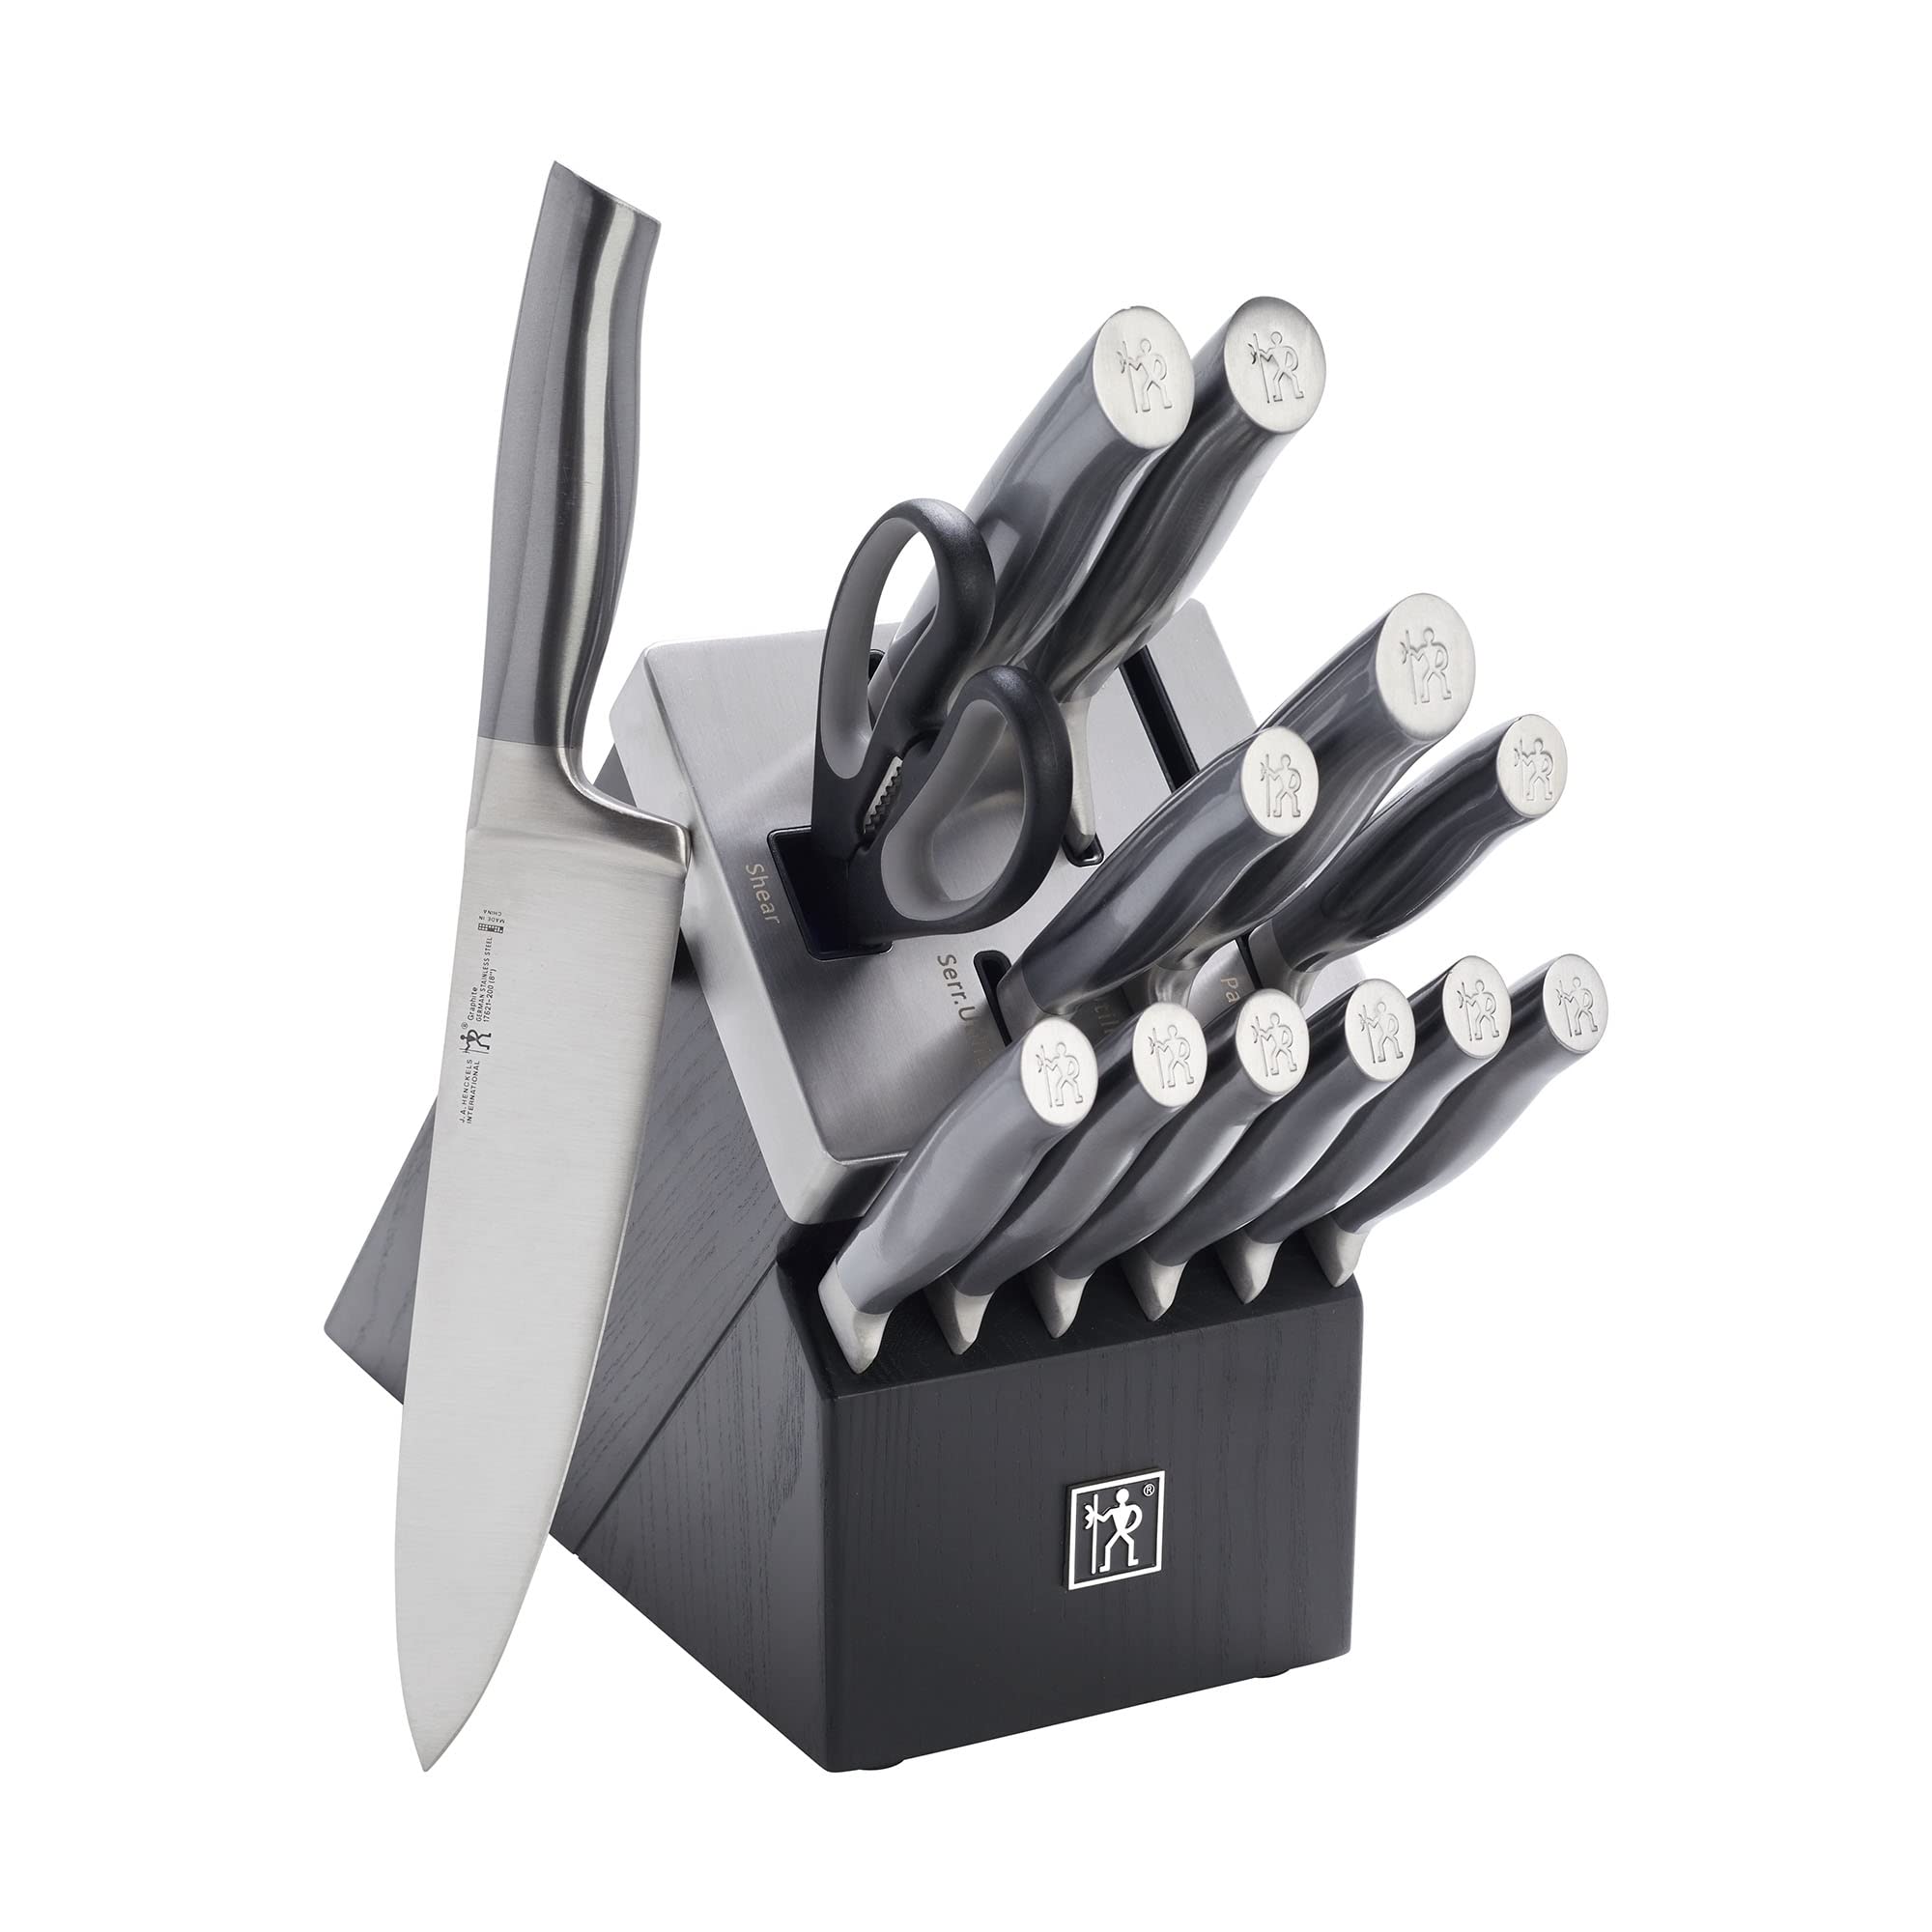 HENCKELS Graphite 14-pc Self-Sharpening Knife Set with Block, Chef Knife, Paring Knife, Utility Knife, Bread Knife, Steak Knife, Black, Stainless Steel